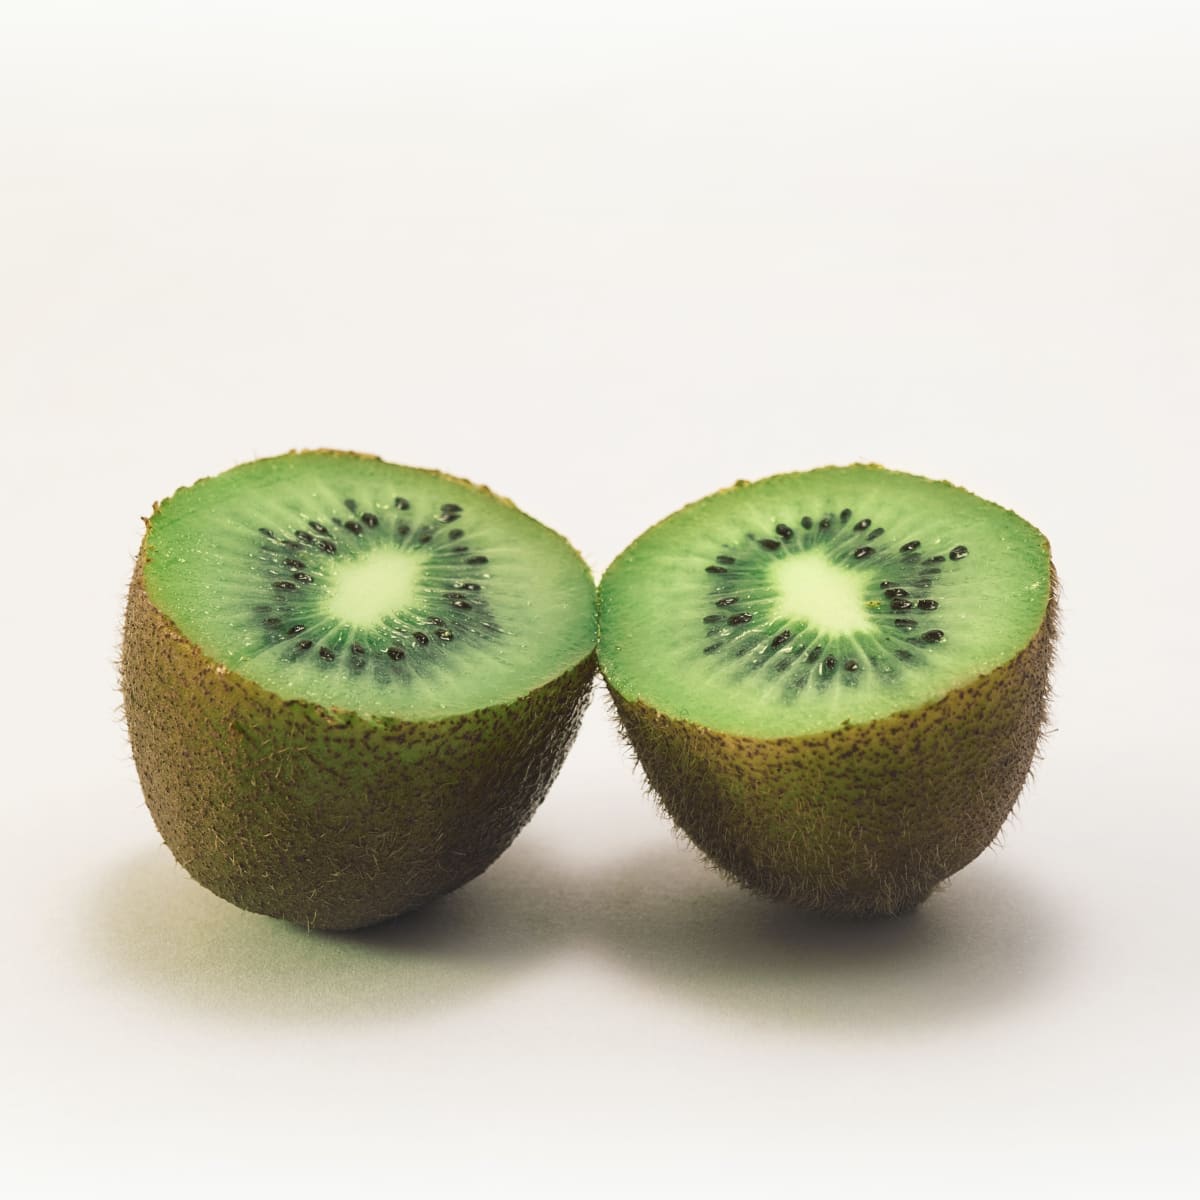 18 Facts About Kiwi Fruit 